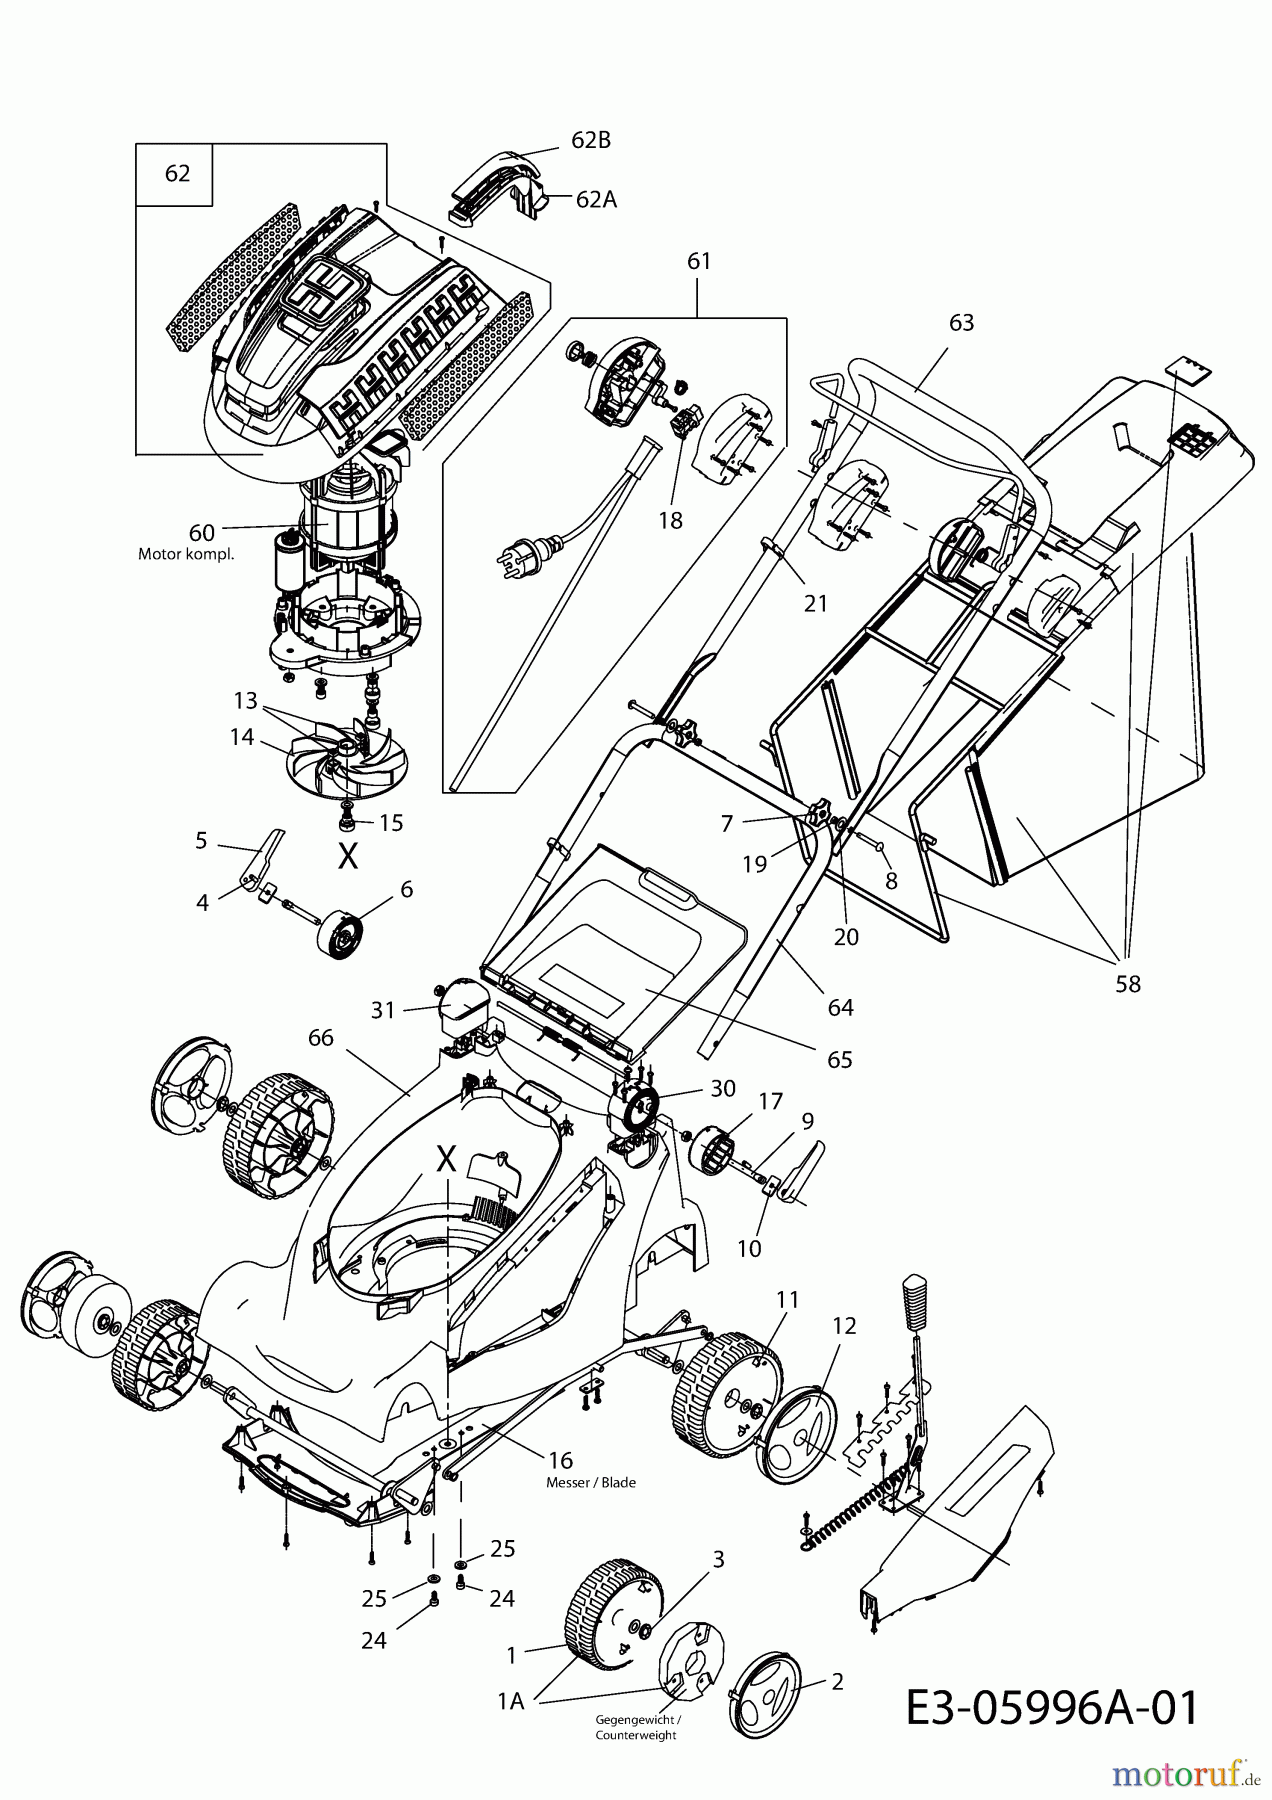  Plantiflor Electric mower 1842 ER 18ACE4L2601  (2011) Basic machine